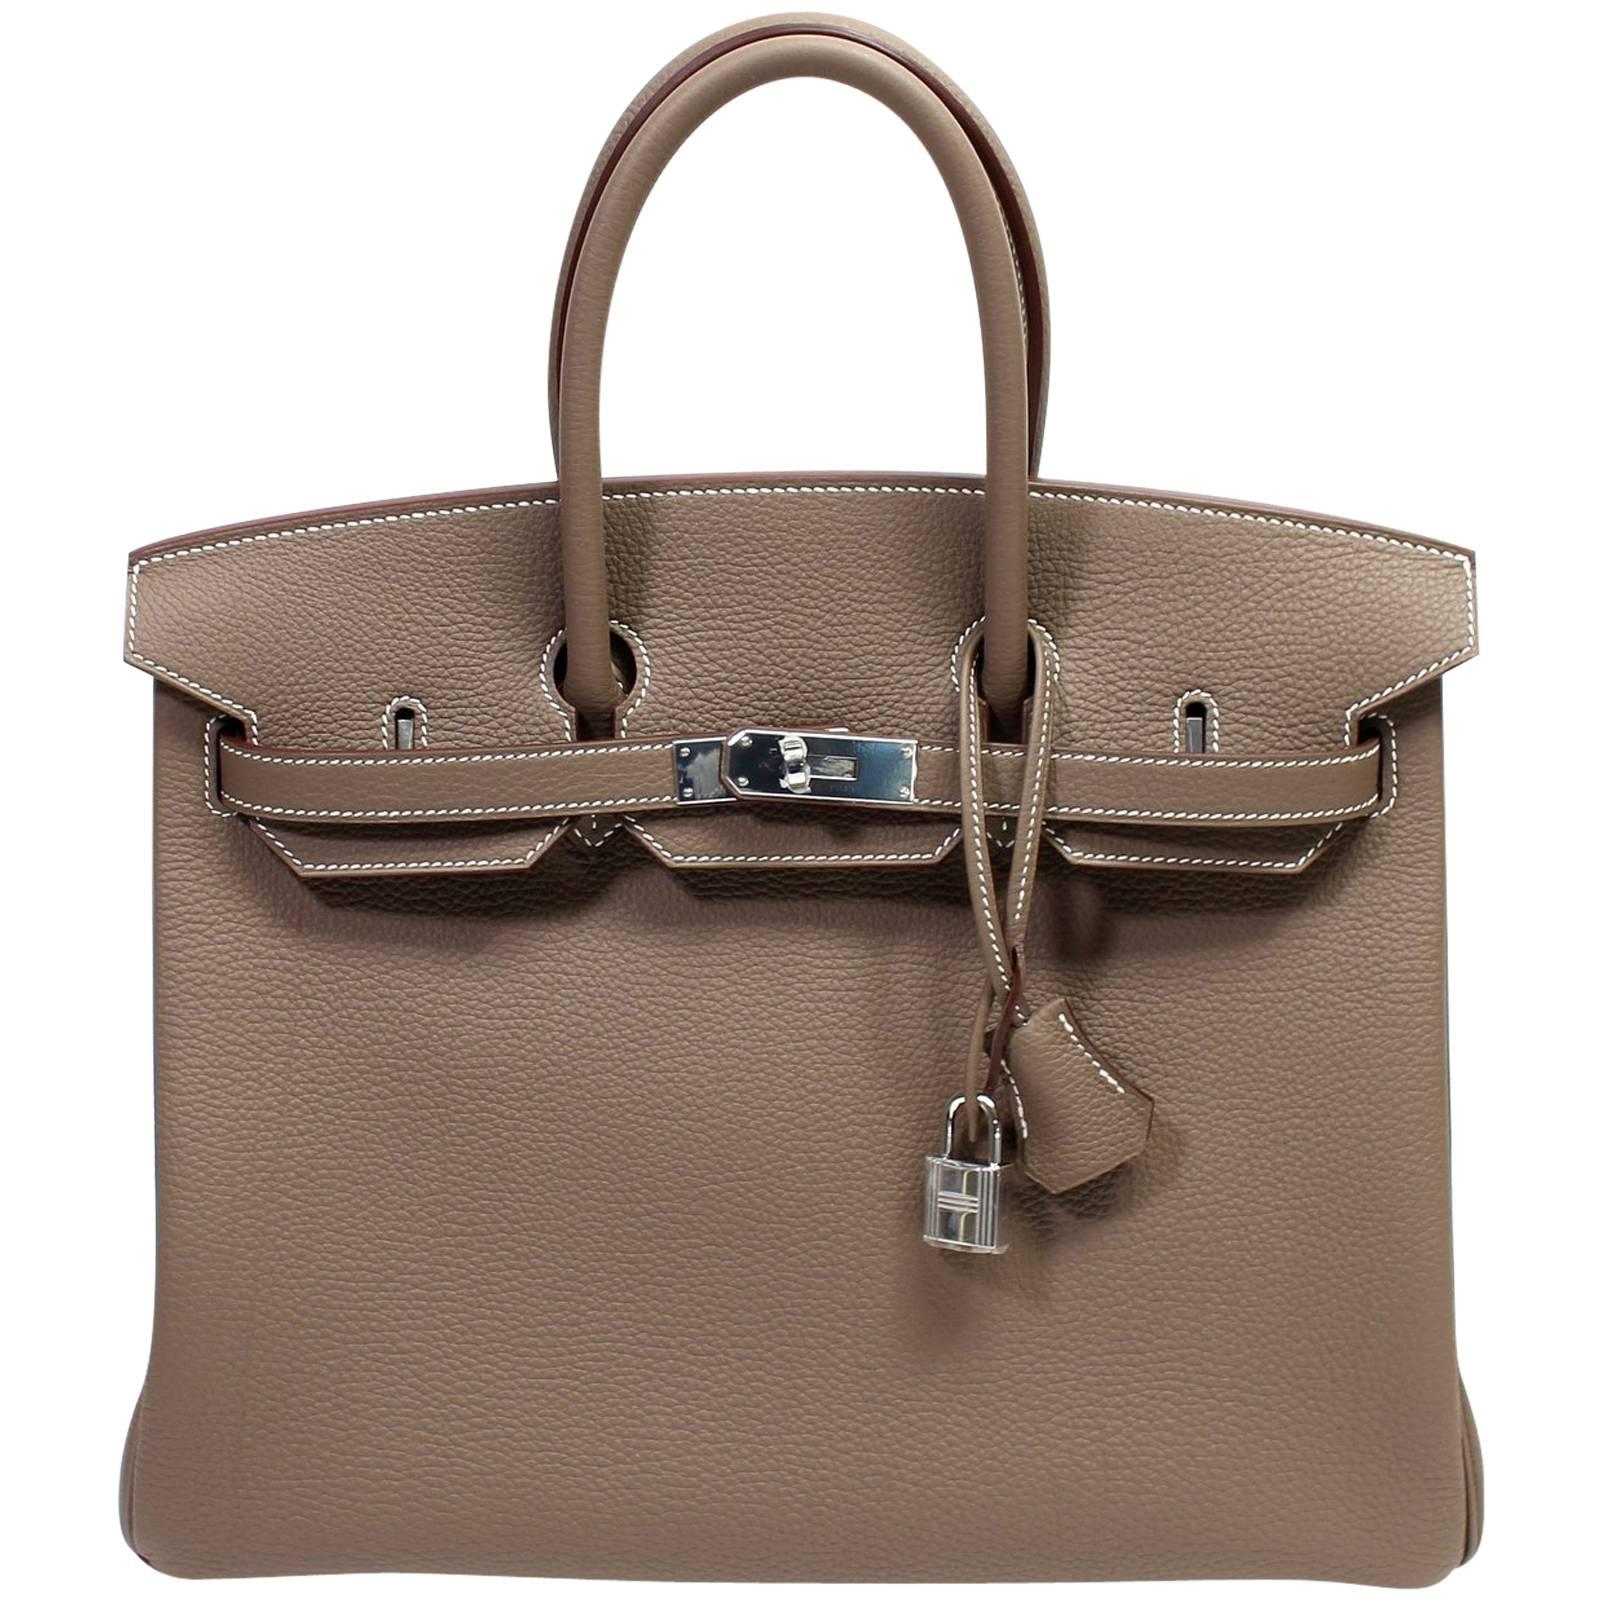 Hermès Etoupe Togo 35 cm Birkin Bag with Palladium Hardware